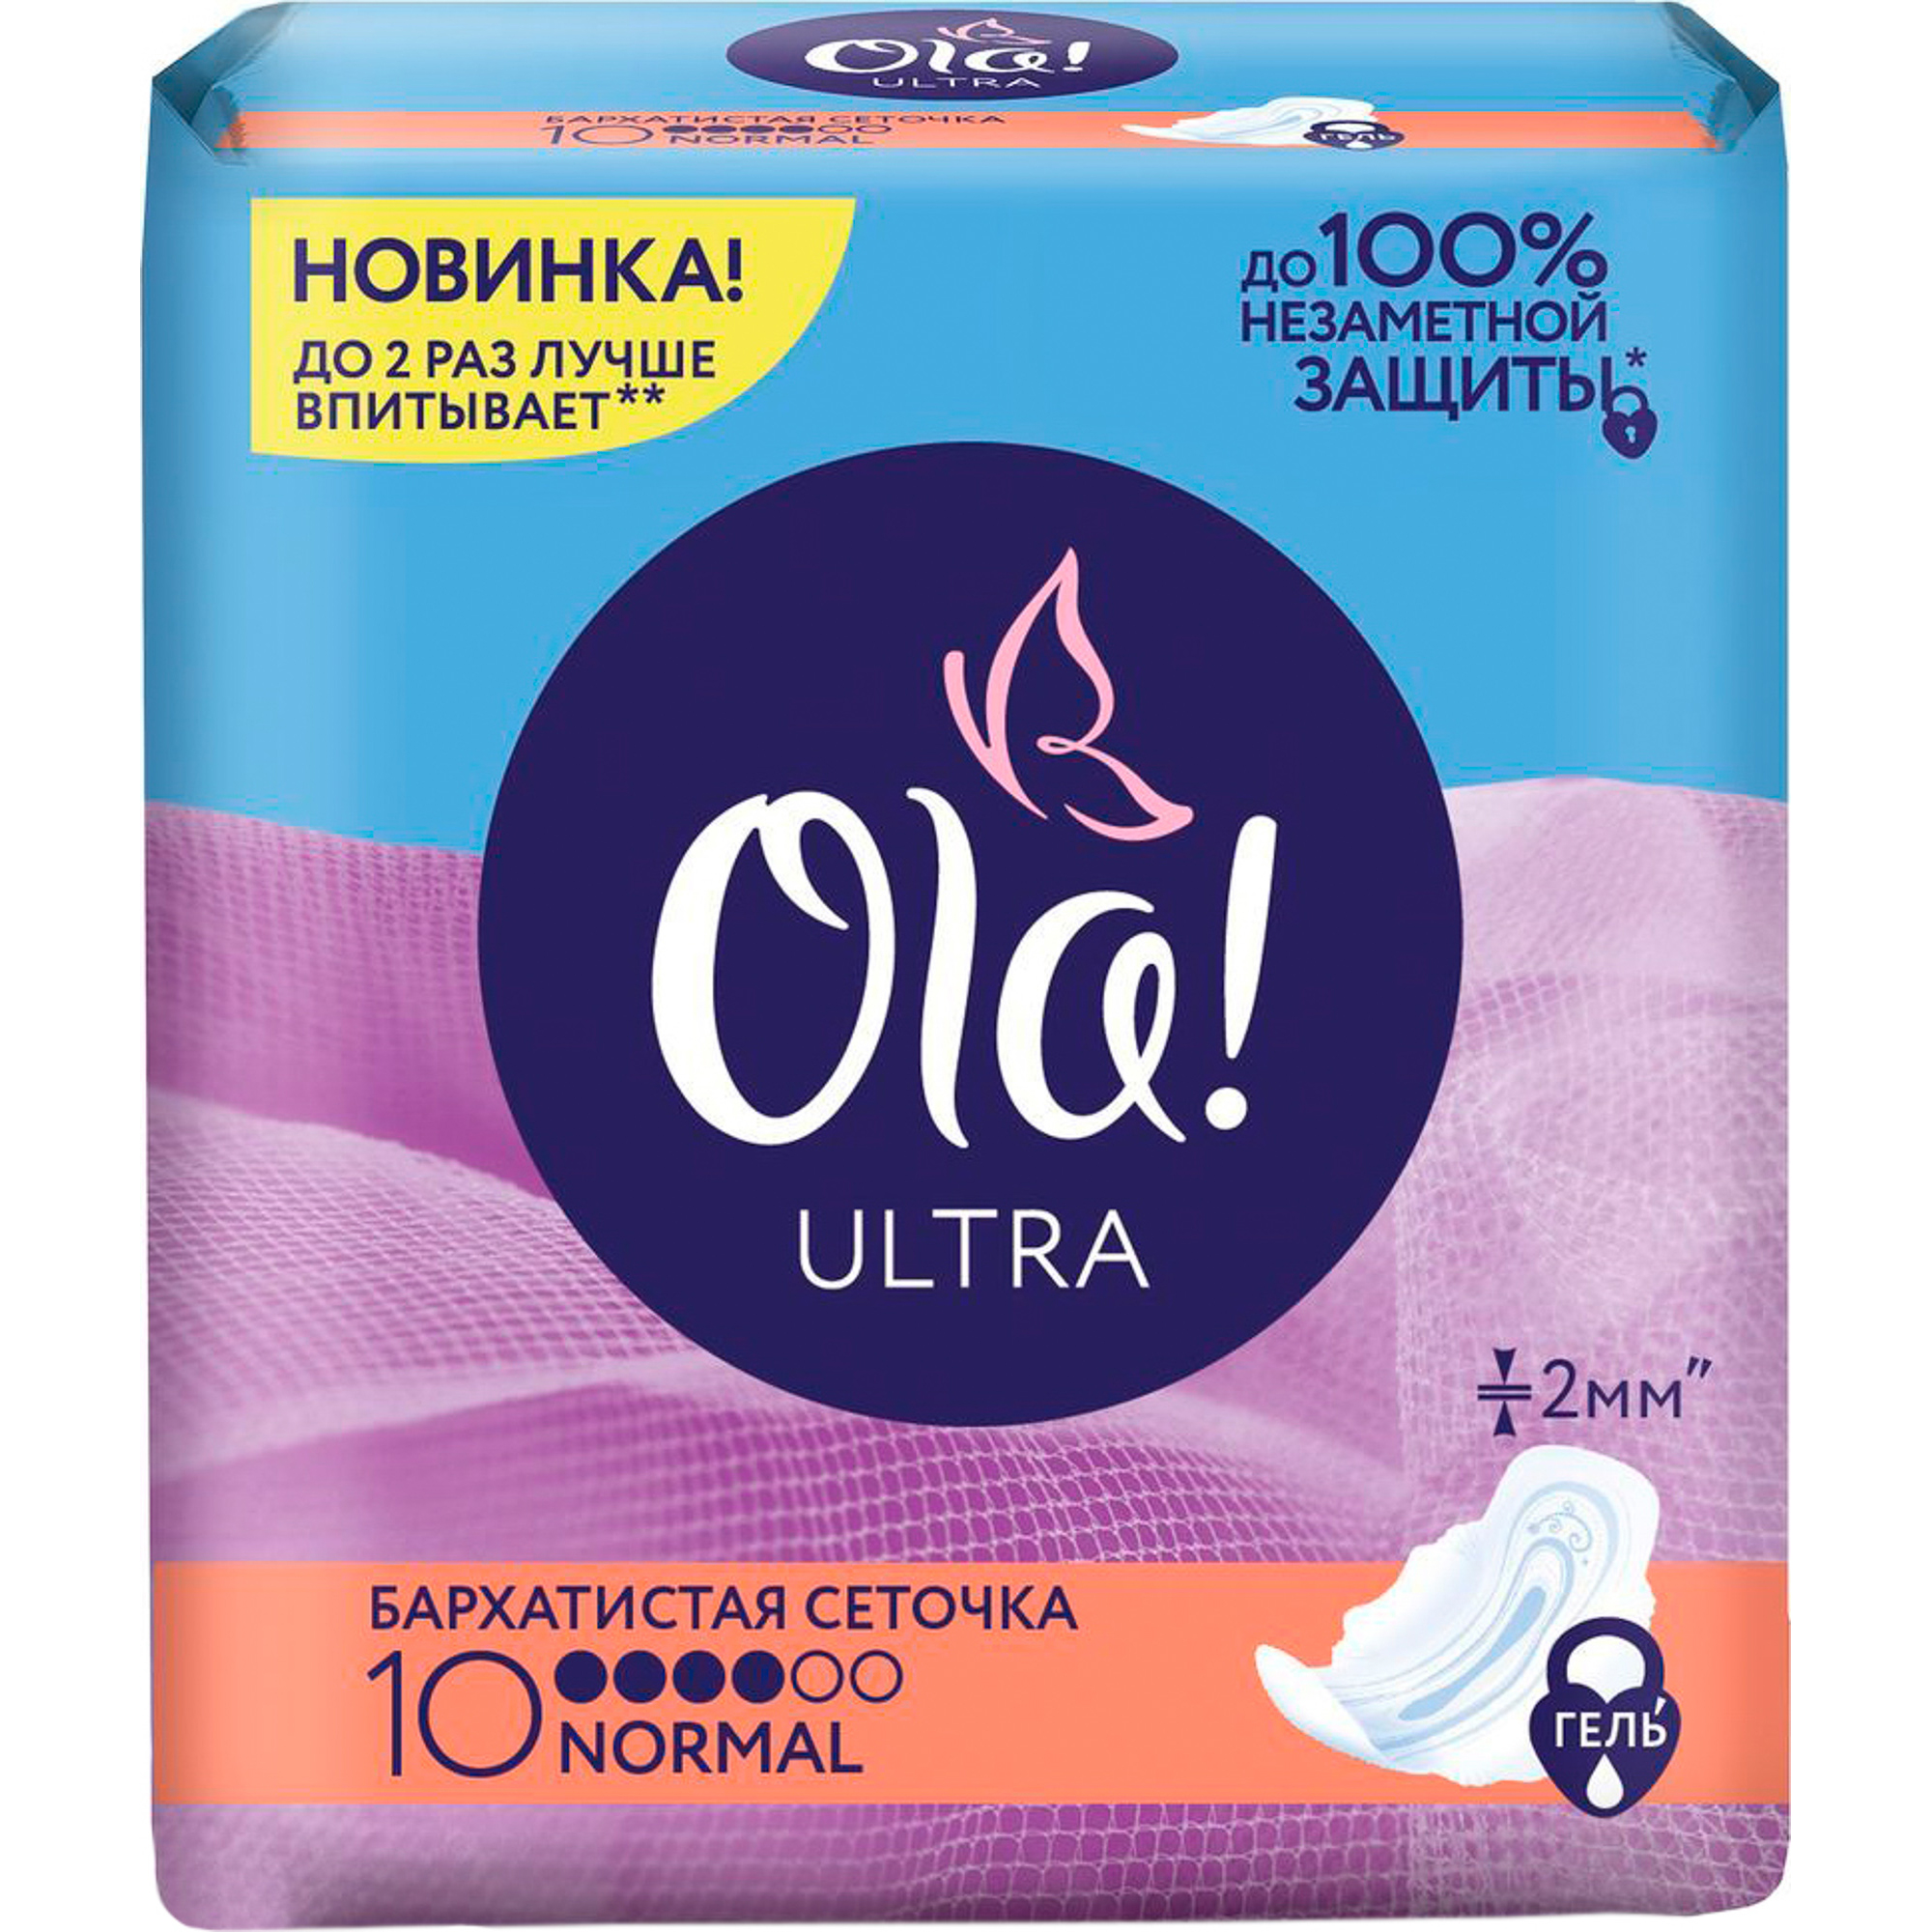 Прокладки Ola! Ultra Normal Бархатистая сеточка 10 шт